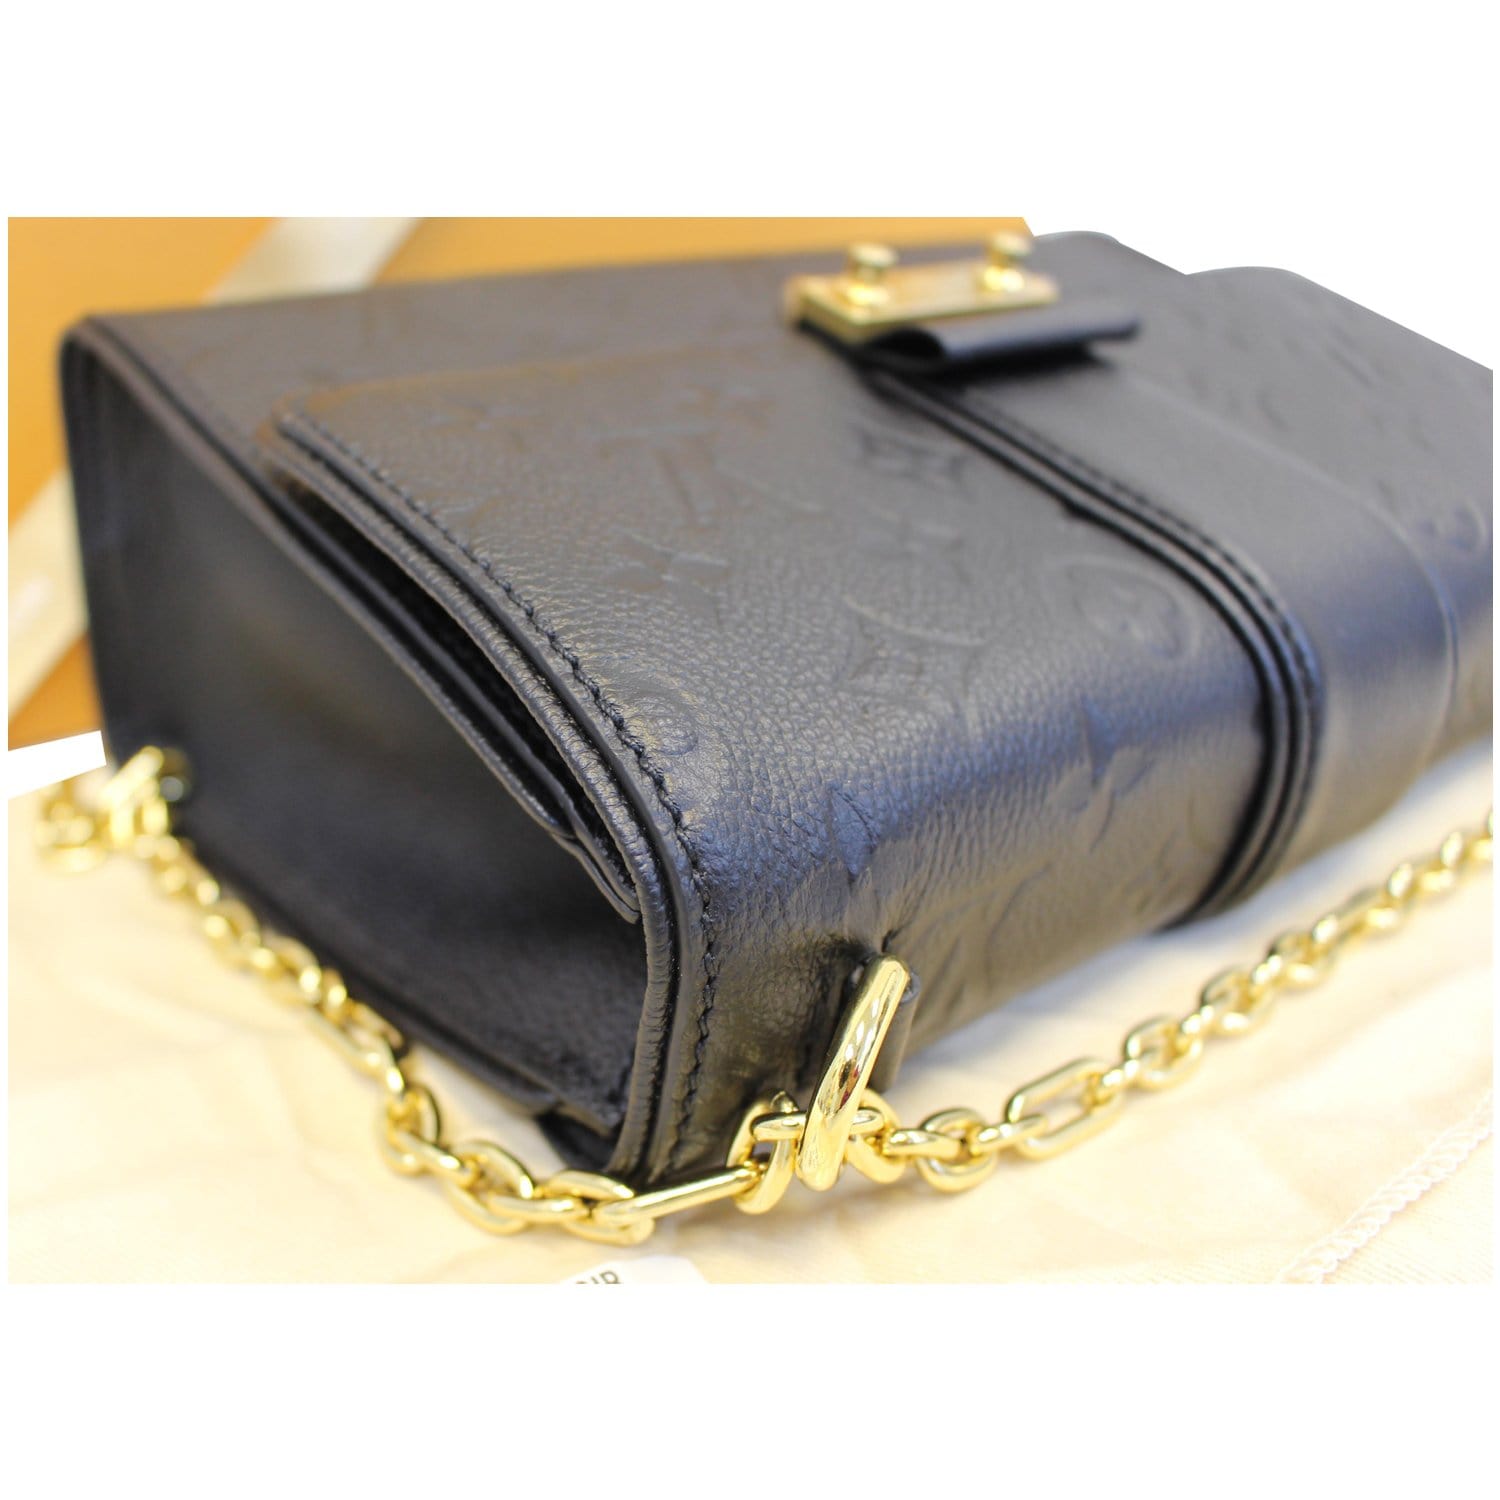 Saint Sulpice PM Empreinte – Keeks Designer Handbags